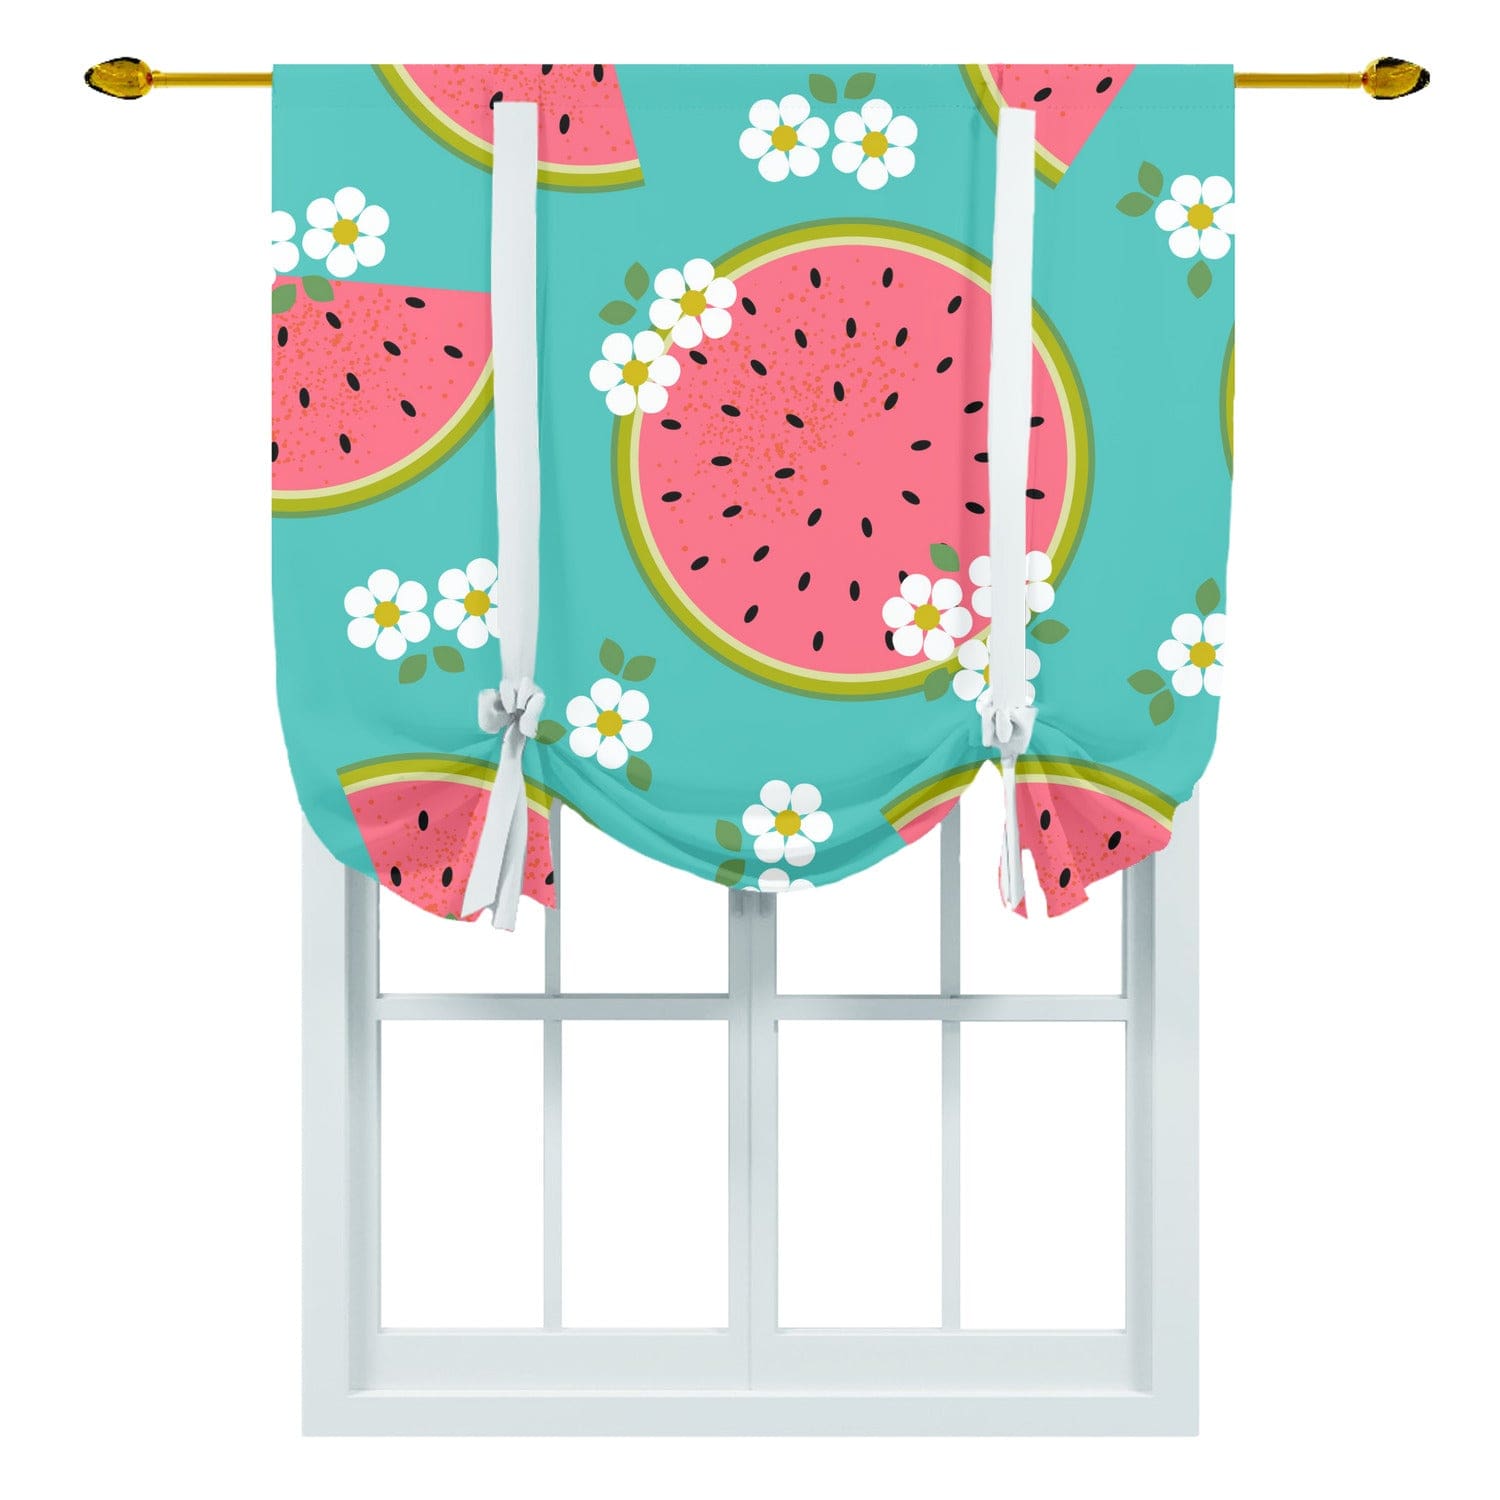 Retro Vintage Watermelon, Teal, Mod Daisy Tie Up curtain Curtains